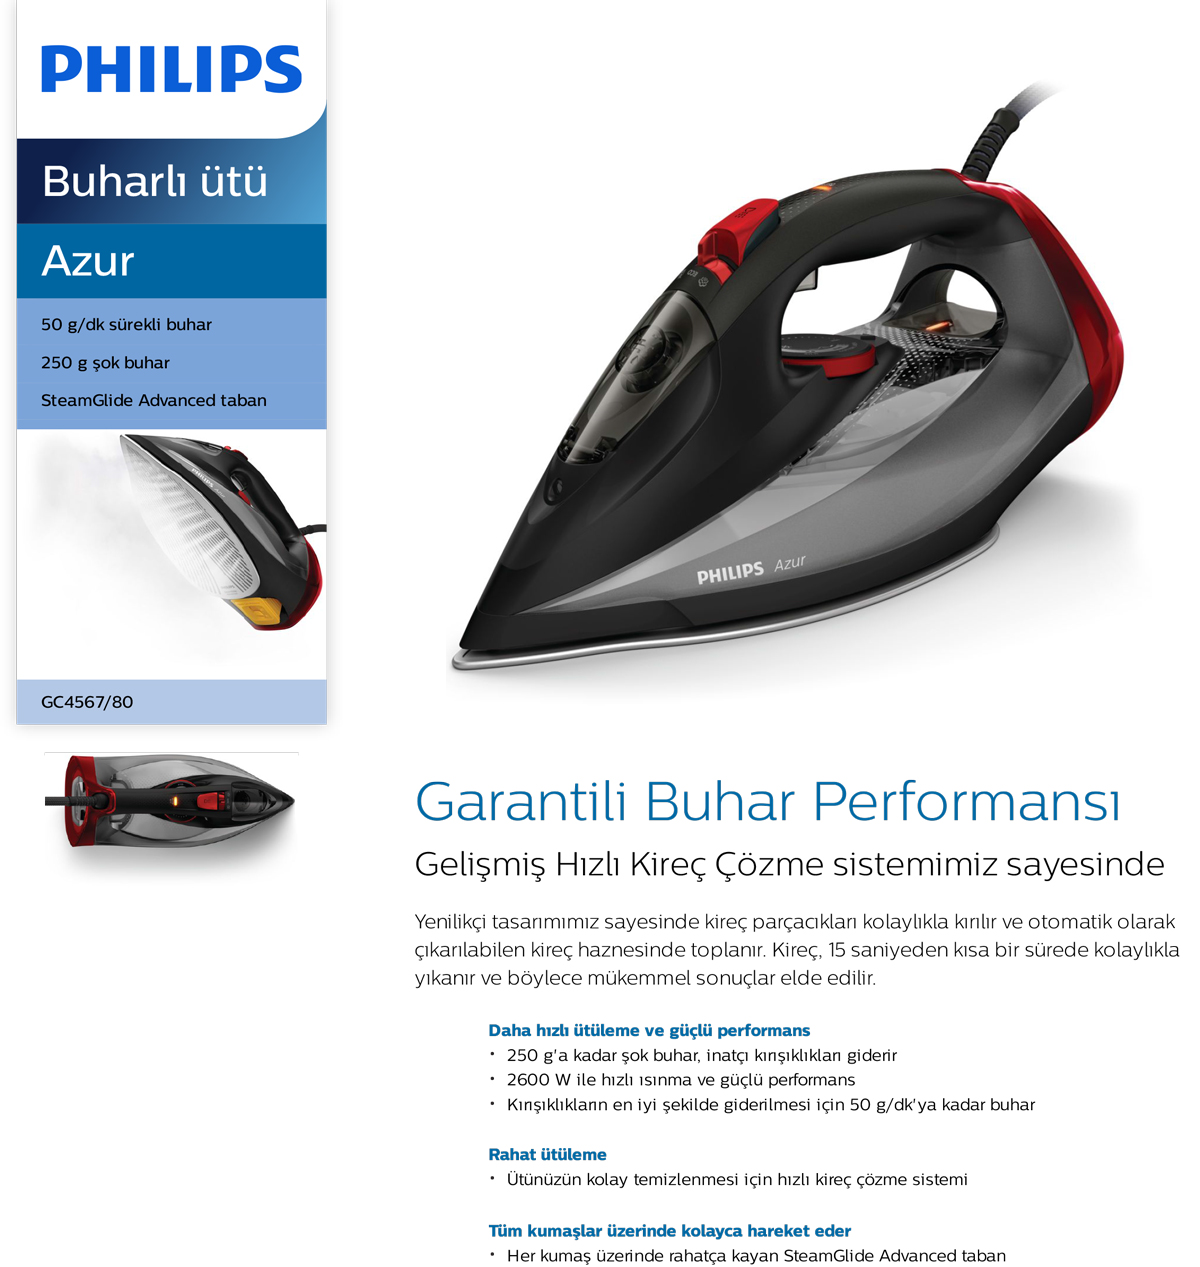 Azur 4567 80. Philips gc4567/80 Azur. Утюг Philips gc4567, 80. Утюг Philips Azur gc4567/80, черный. Philips Azur 4567.